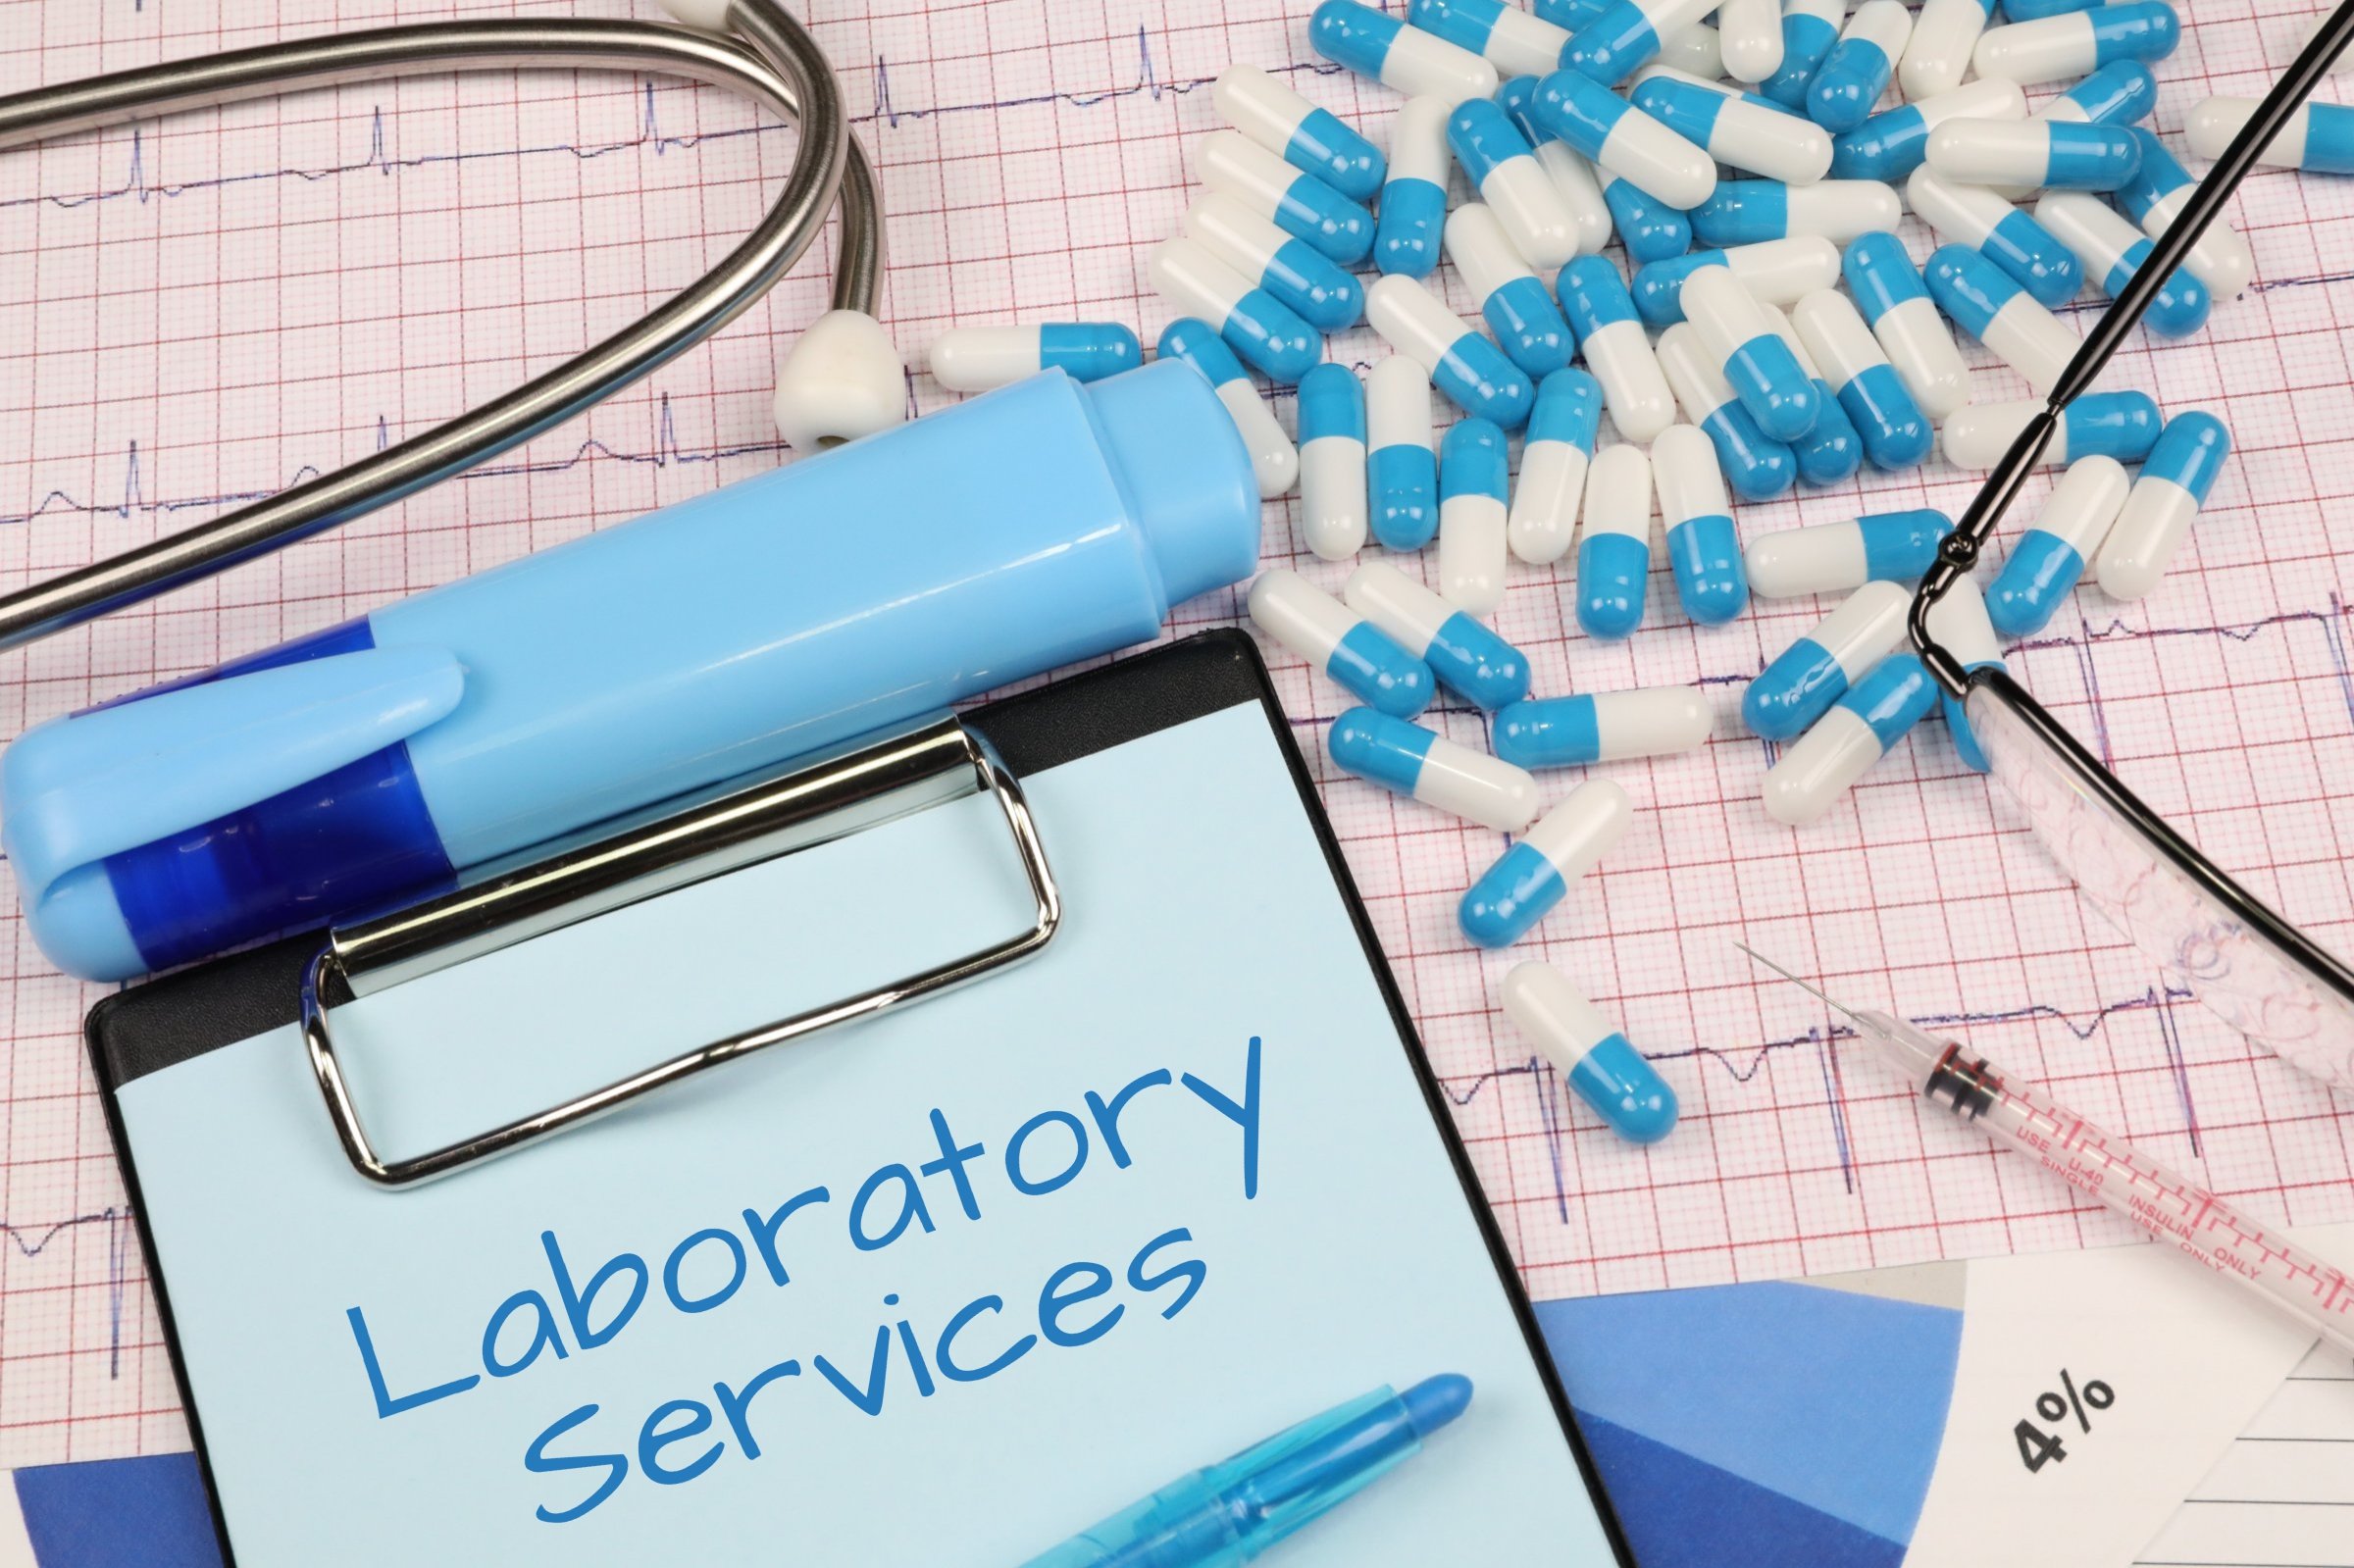 laboratory services